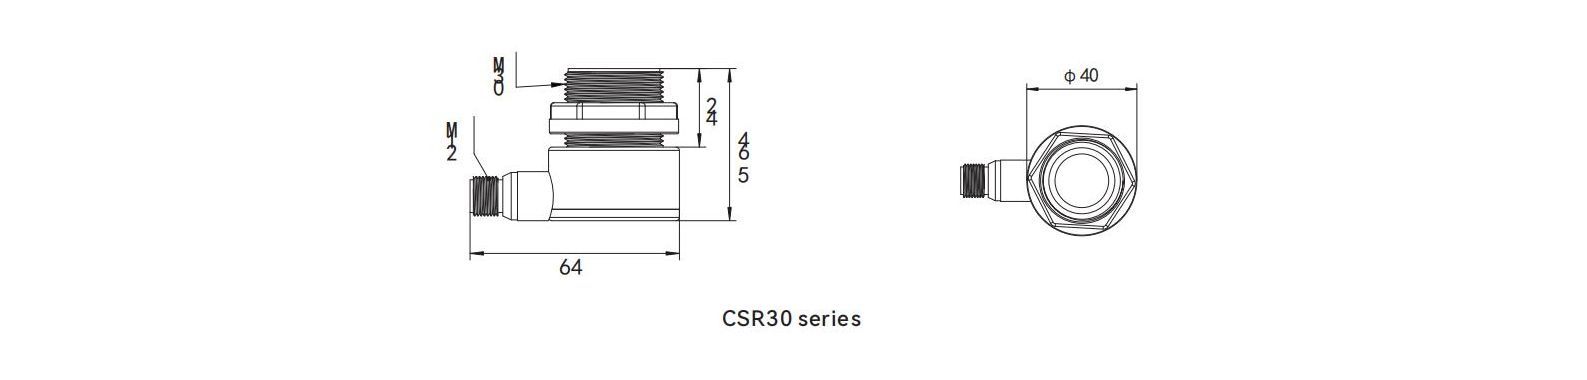 Dimensions of ultrasonic fuel level sensor CSR30 series